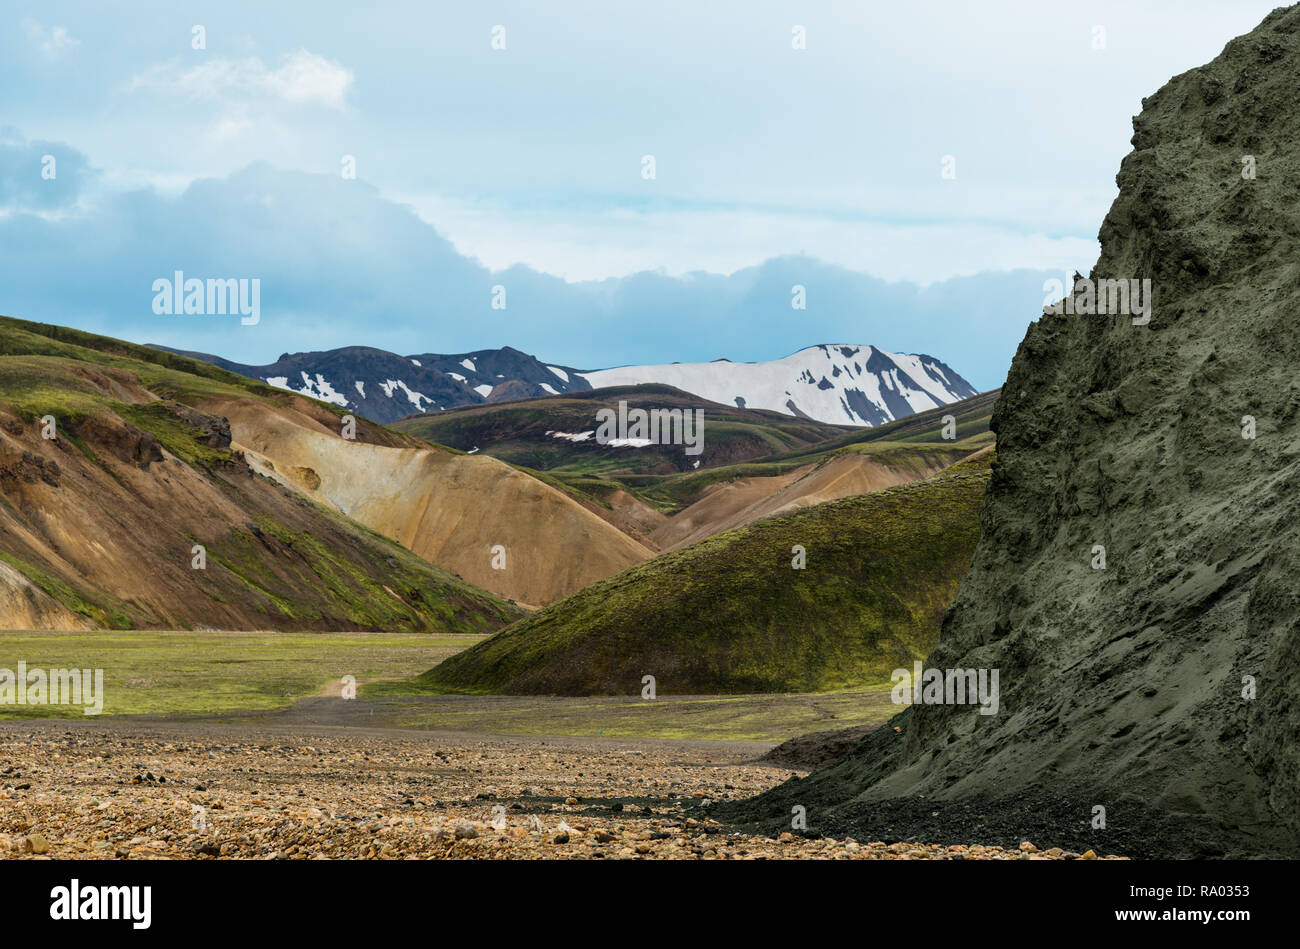 Iceland landscape, mountains in Landmannalaugar area Stock Photo